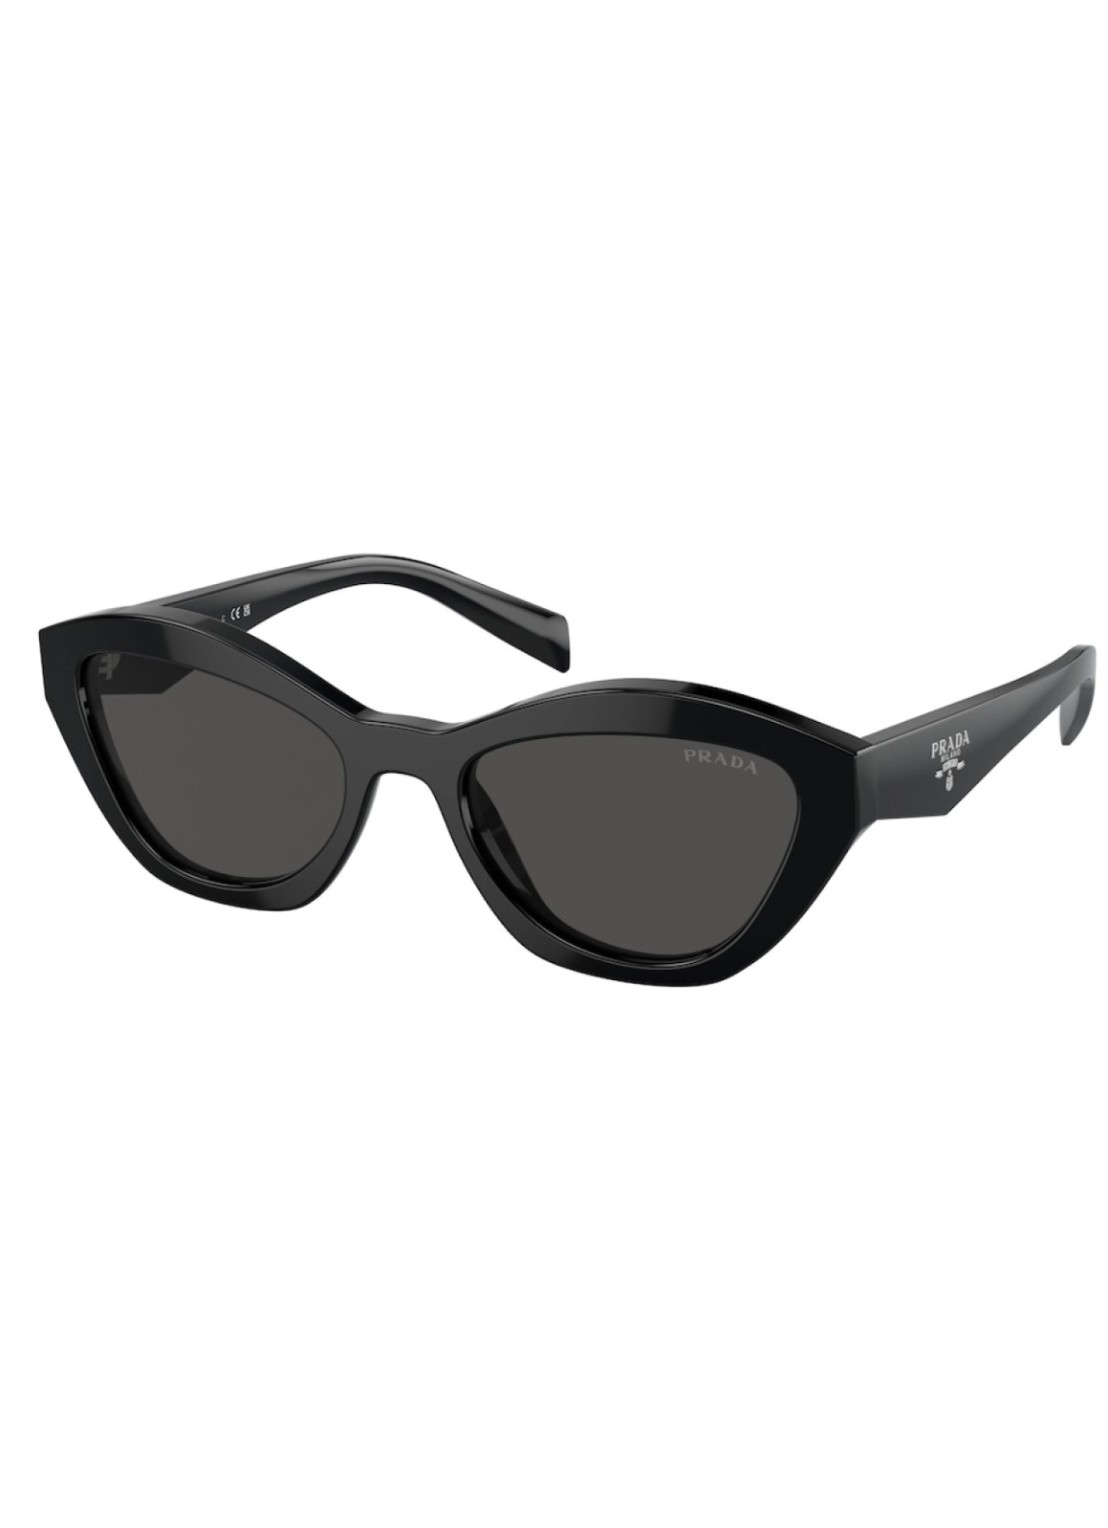 Gafas prada sunglasses woman 0pra02s 0pra02s 16k08z talla transparente
 